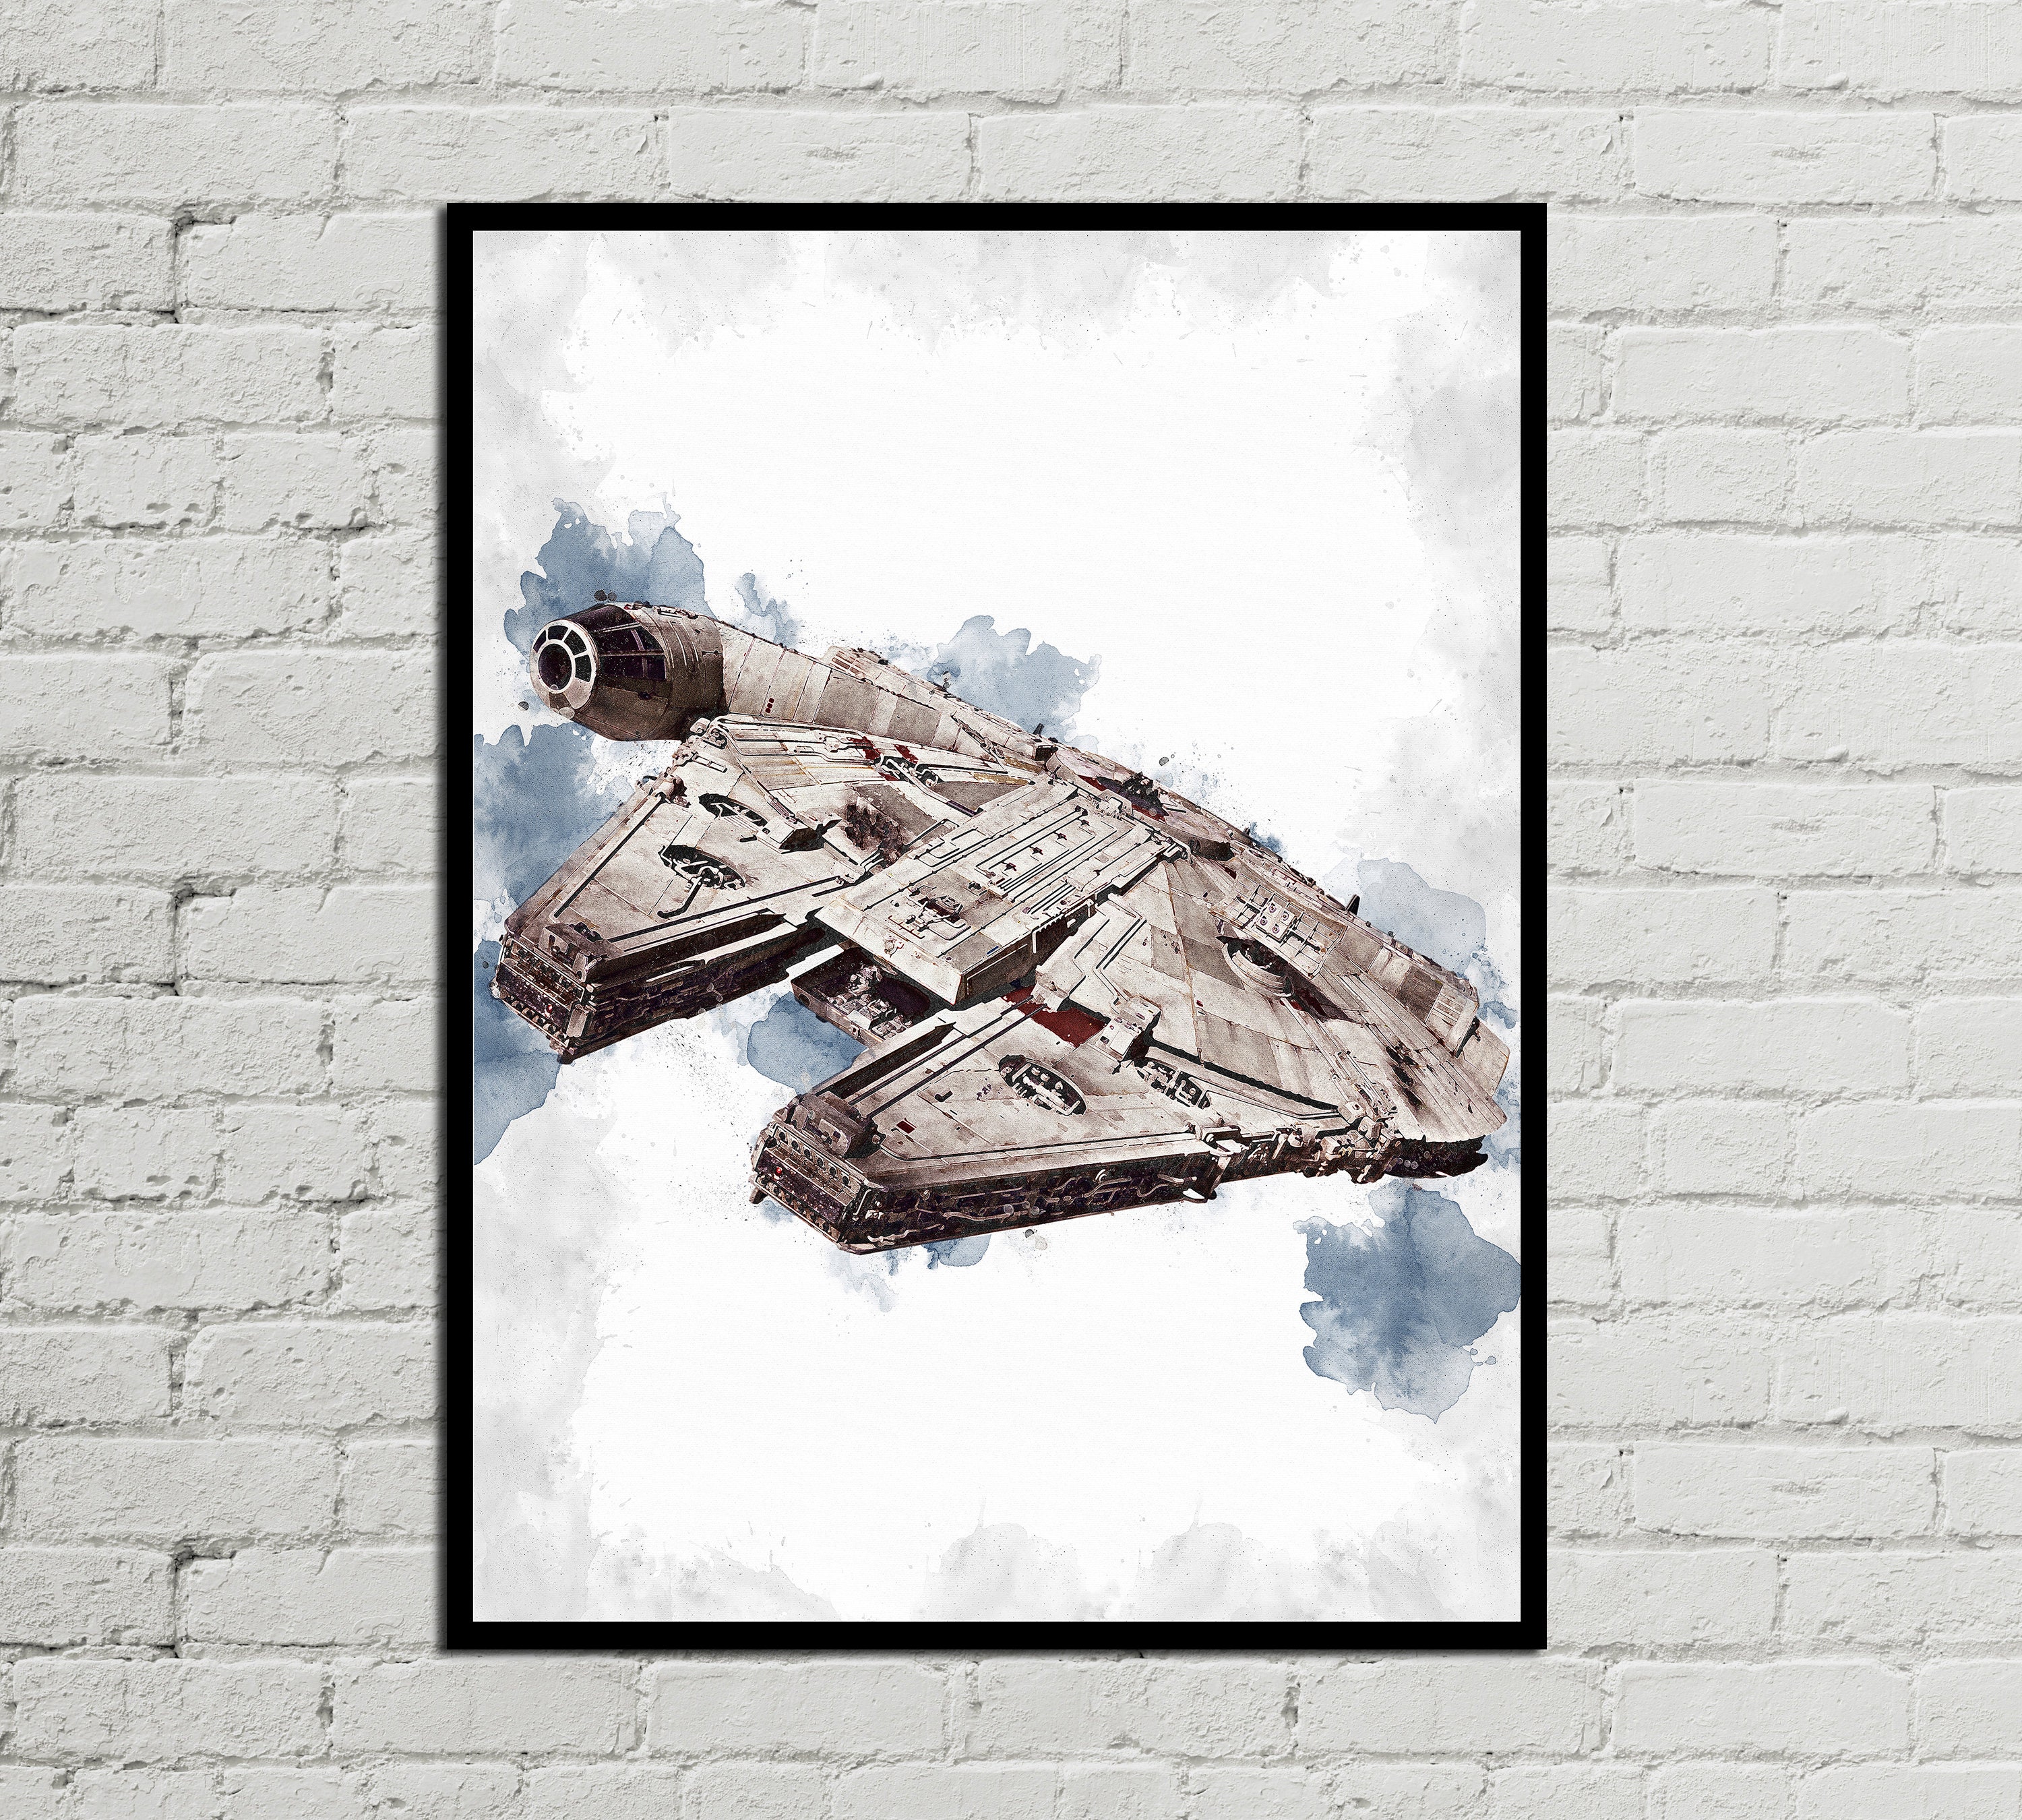 MILLENNIUM FALCON - Star Wars Poster - Millennium Falcon Poster - Digital Download - Digital Print - Fan Art - Printable Art - Wall Art